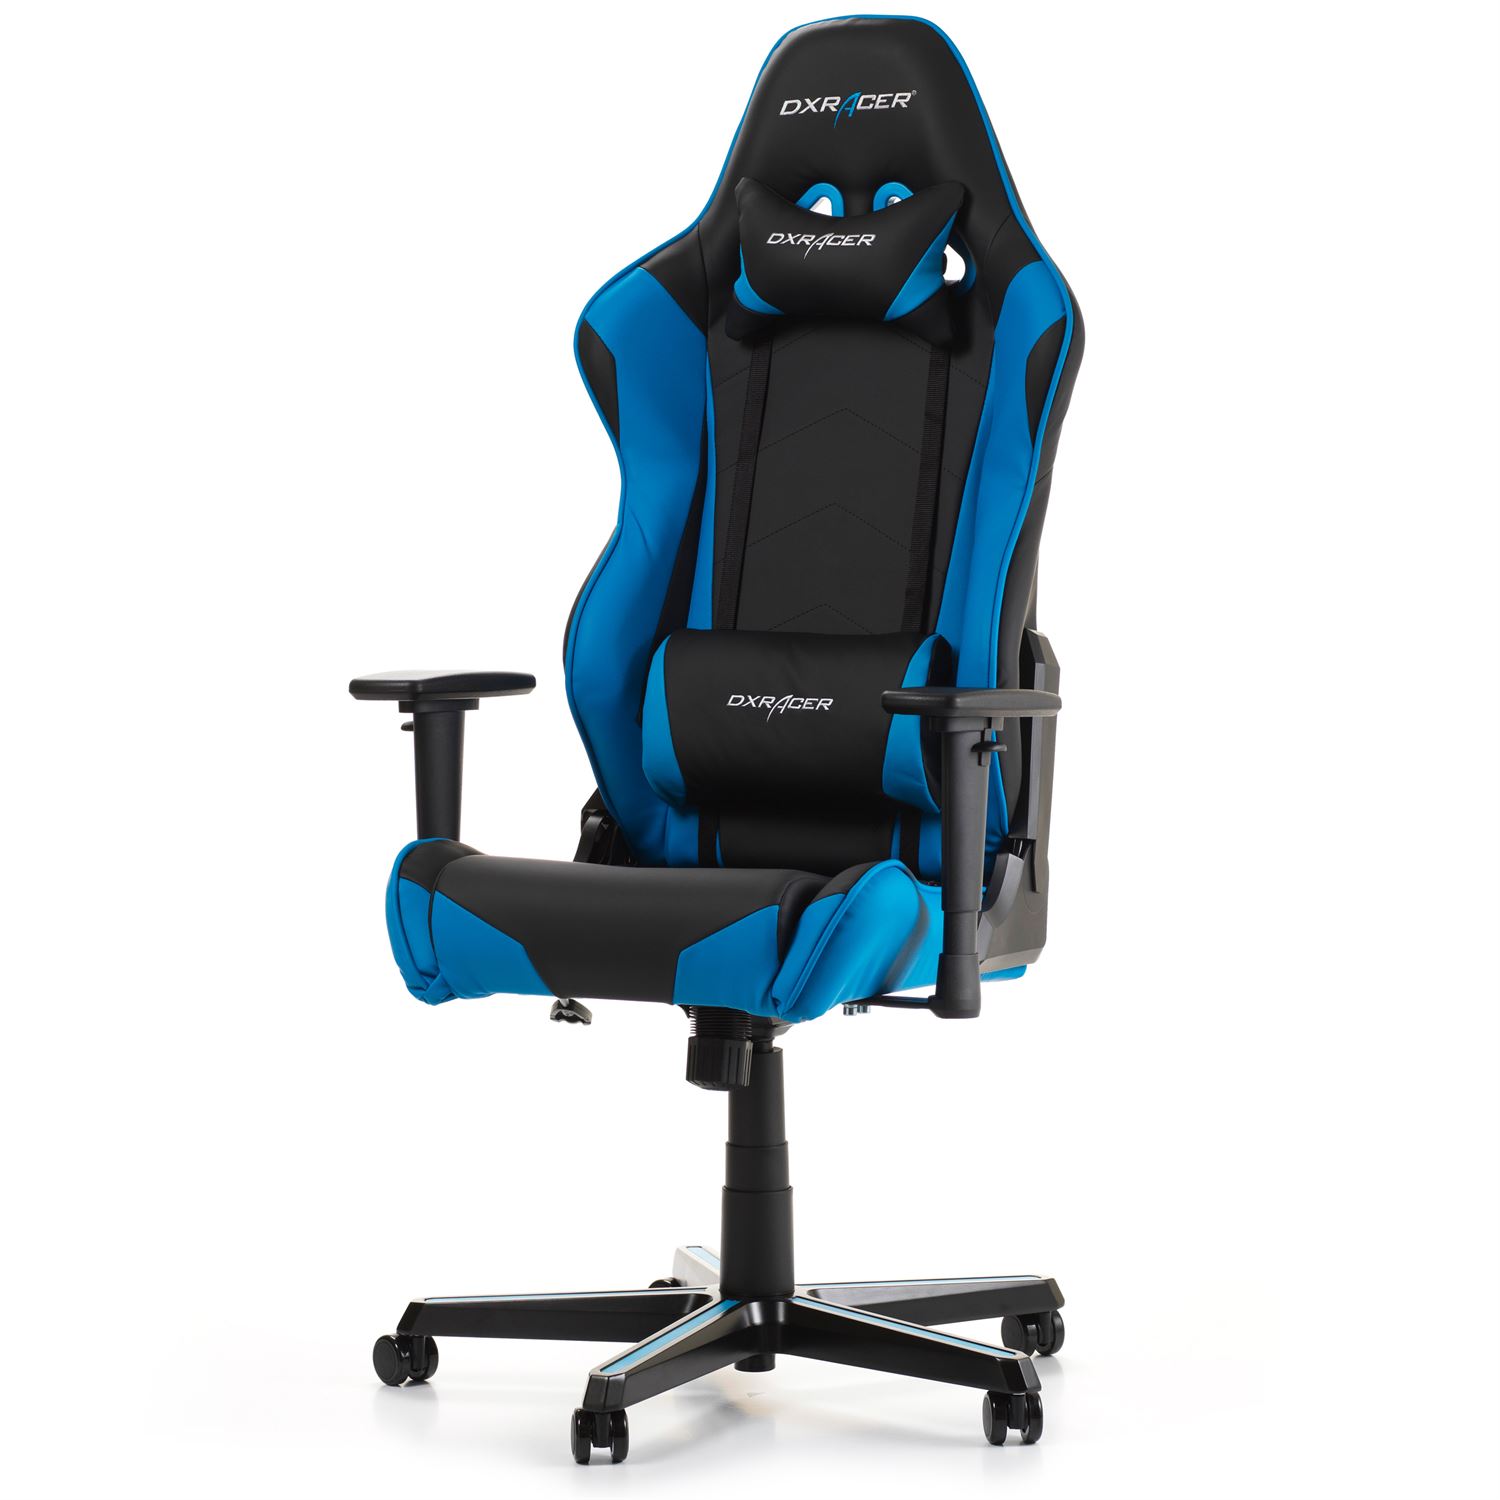  DXRacer  RACING Gaming  Chair  R0 NB K b hos WEBdanes dk